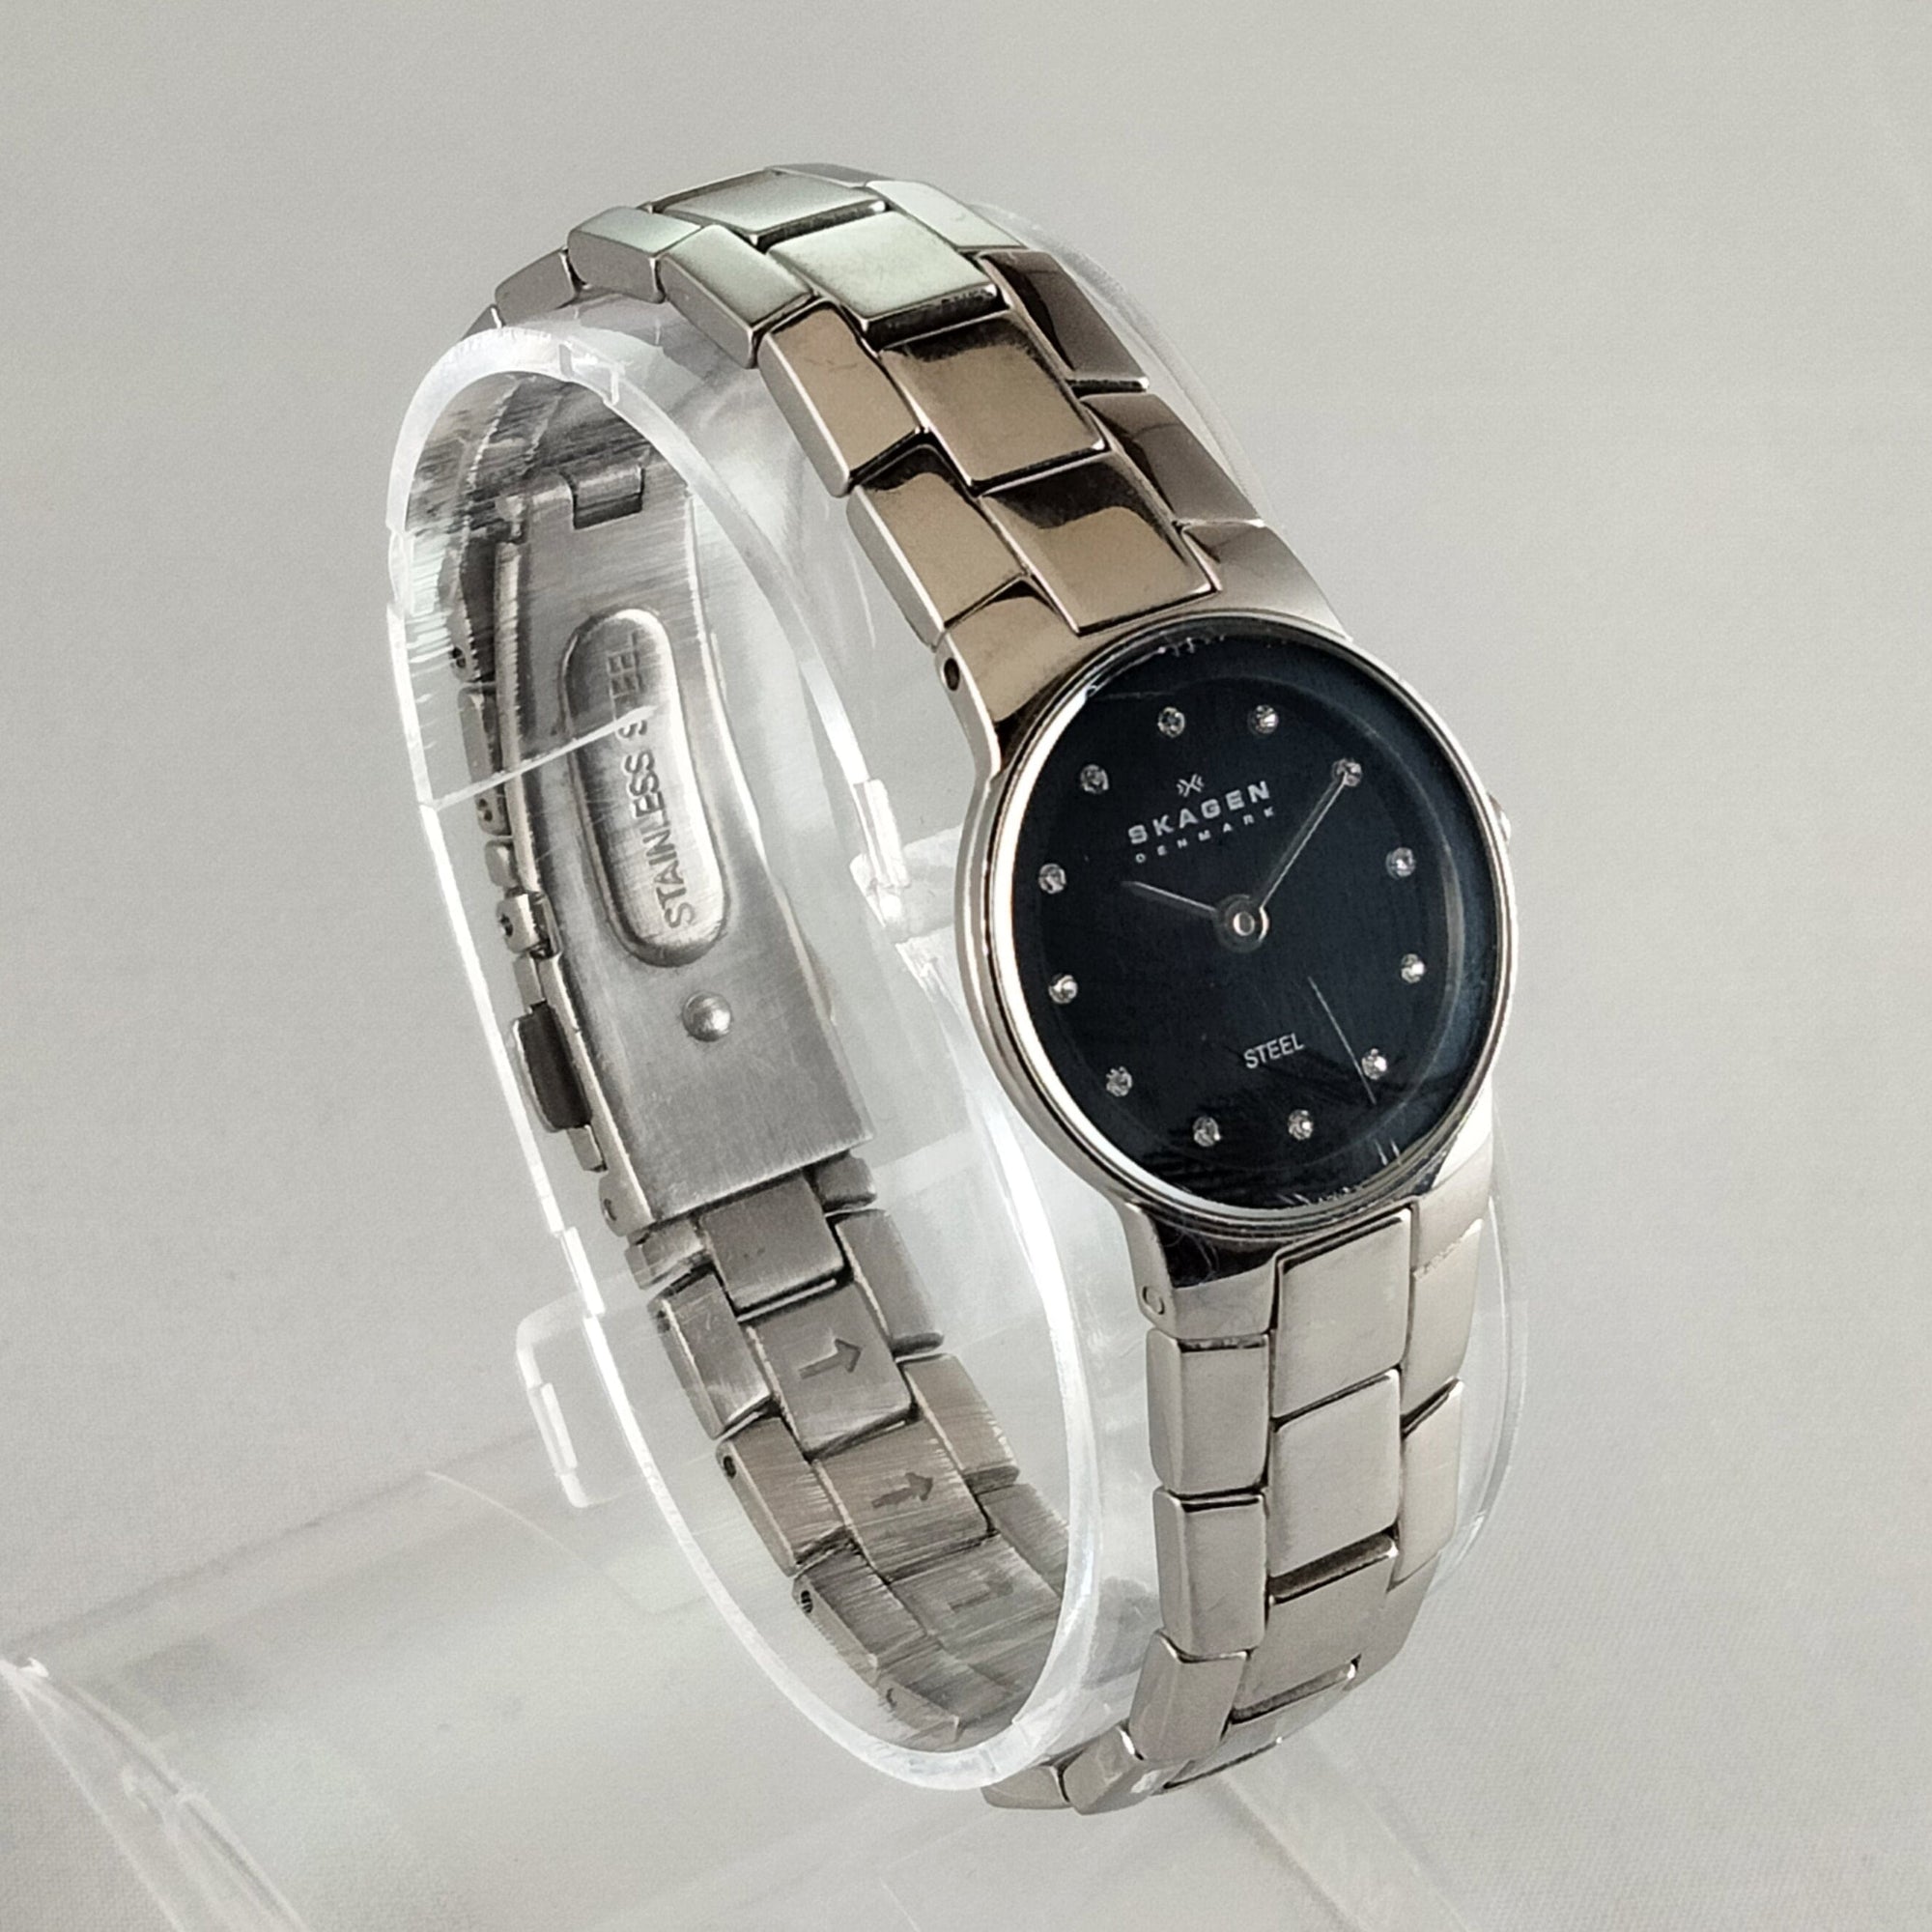 I Like Mikes Mid Century Modern Watches Skagen Women's Stainless Steel Watch, Black Dial, Jewel Hour Markers, Link Bracelet